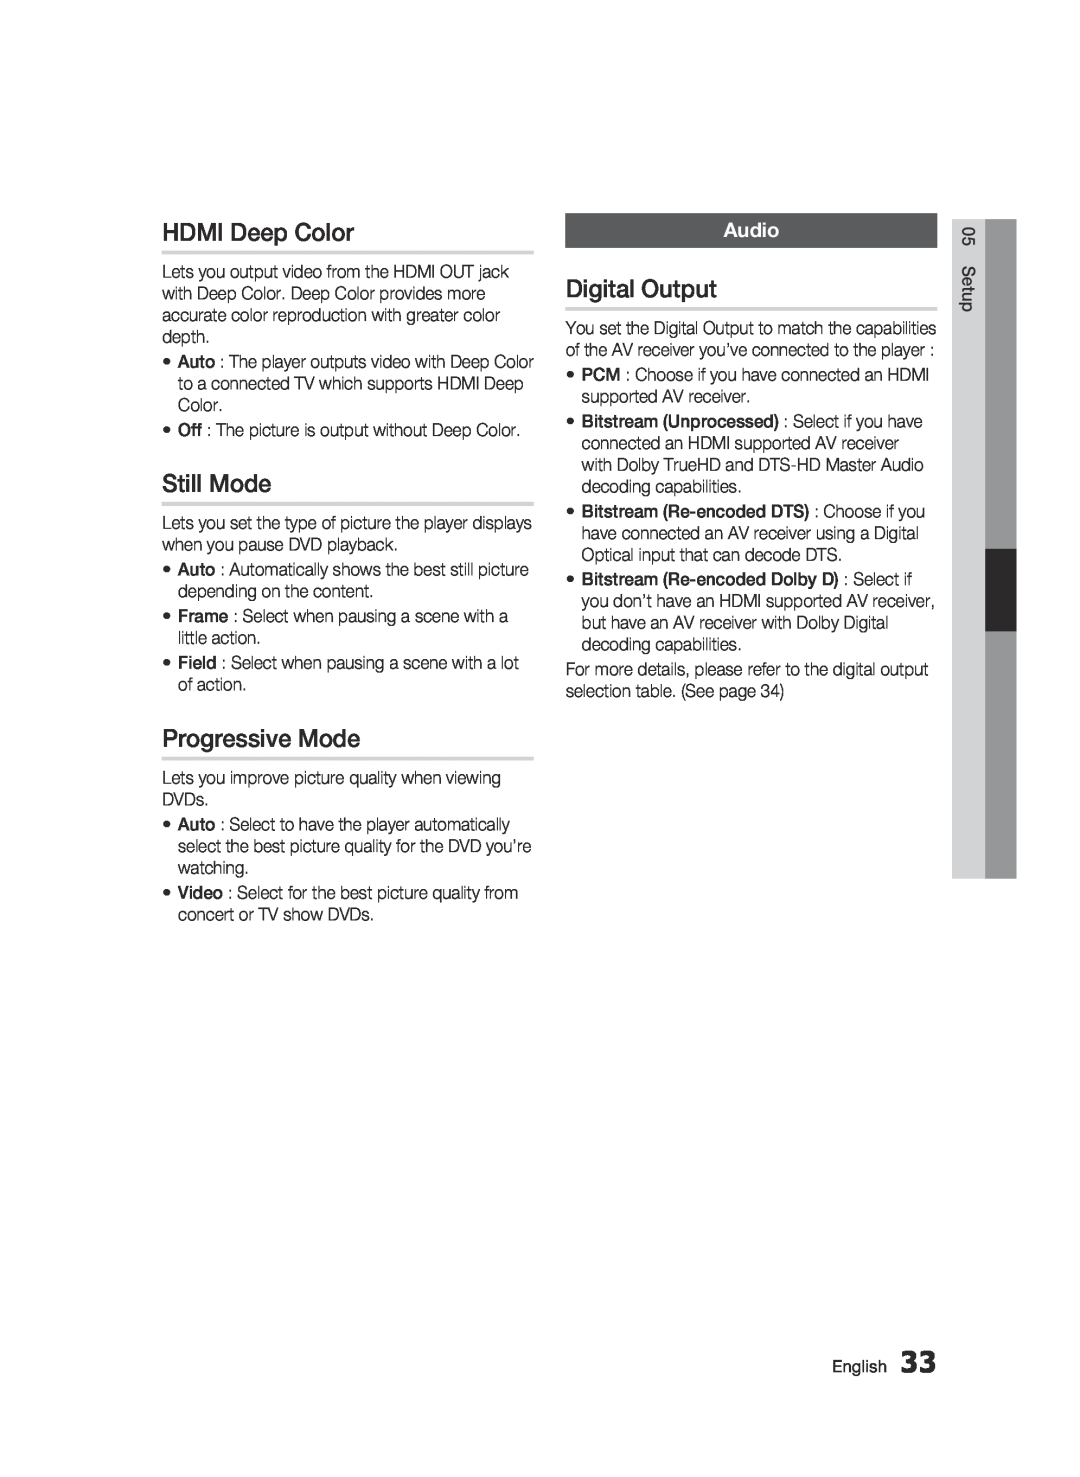 Samsung BD-D6500 user manual HDMI Deep Color, Still Mode, Progressive Mode, Digital Output, Audio 